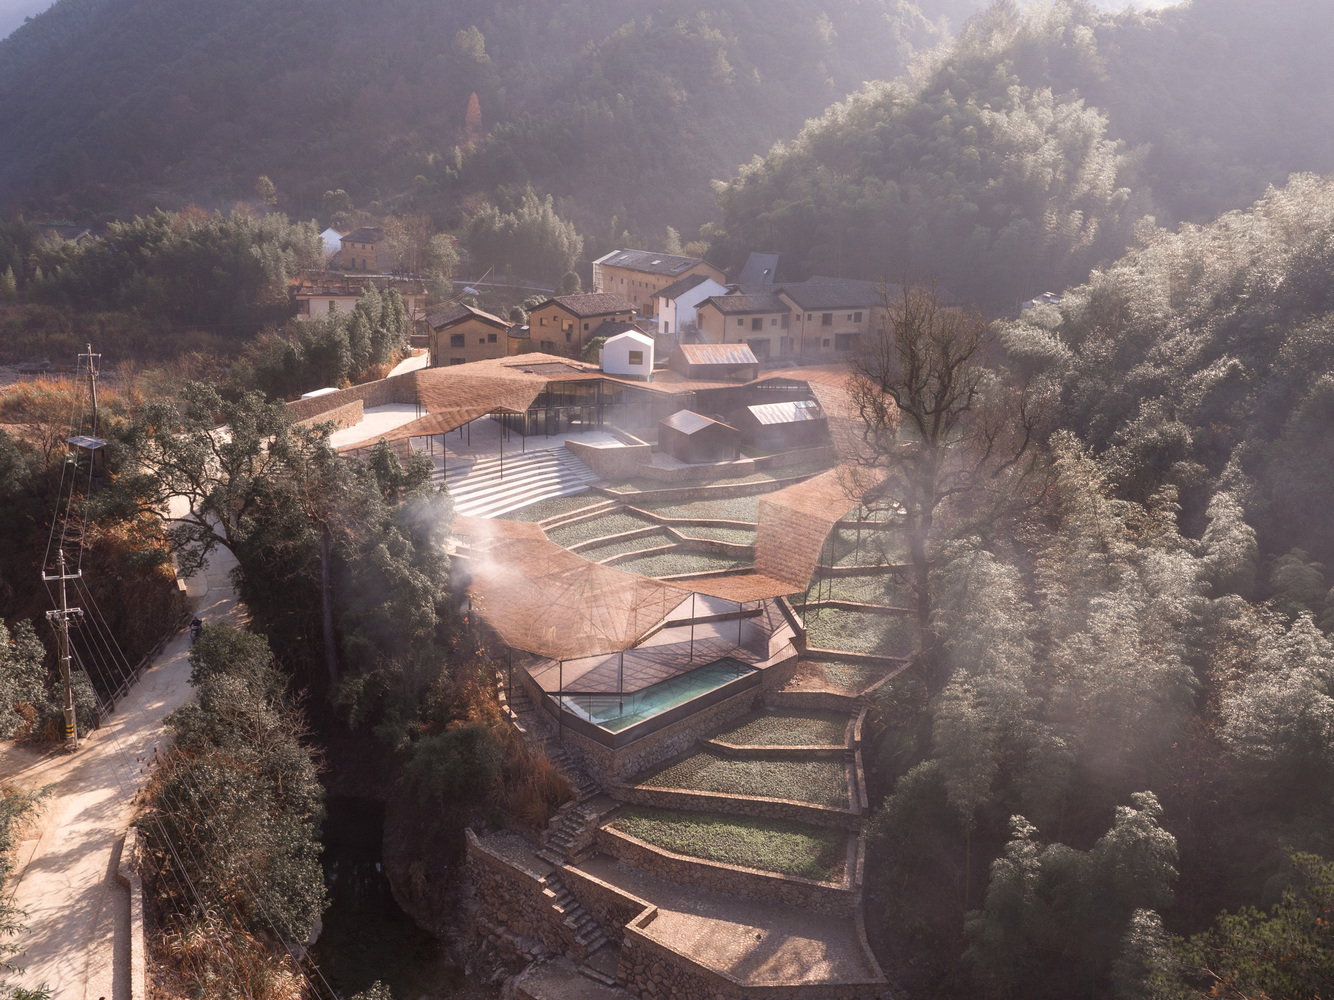 Aerial view of the Sou Fujimoto-designed Flowing Cloud pavilion in China's mountainous Zhejiang province.